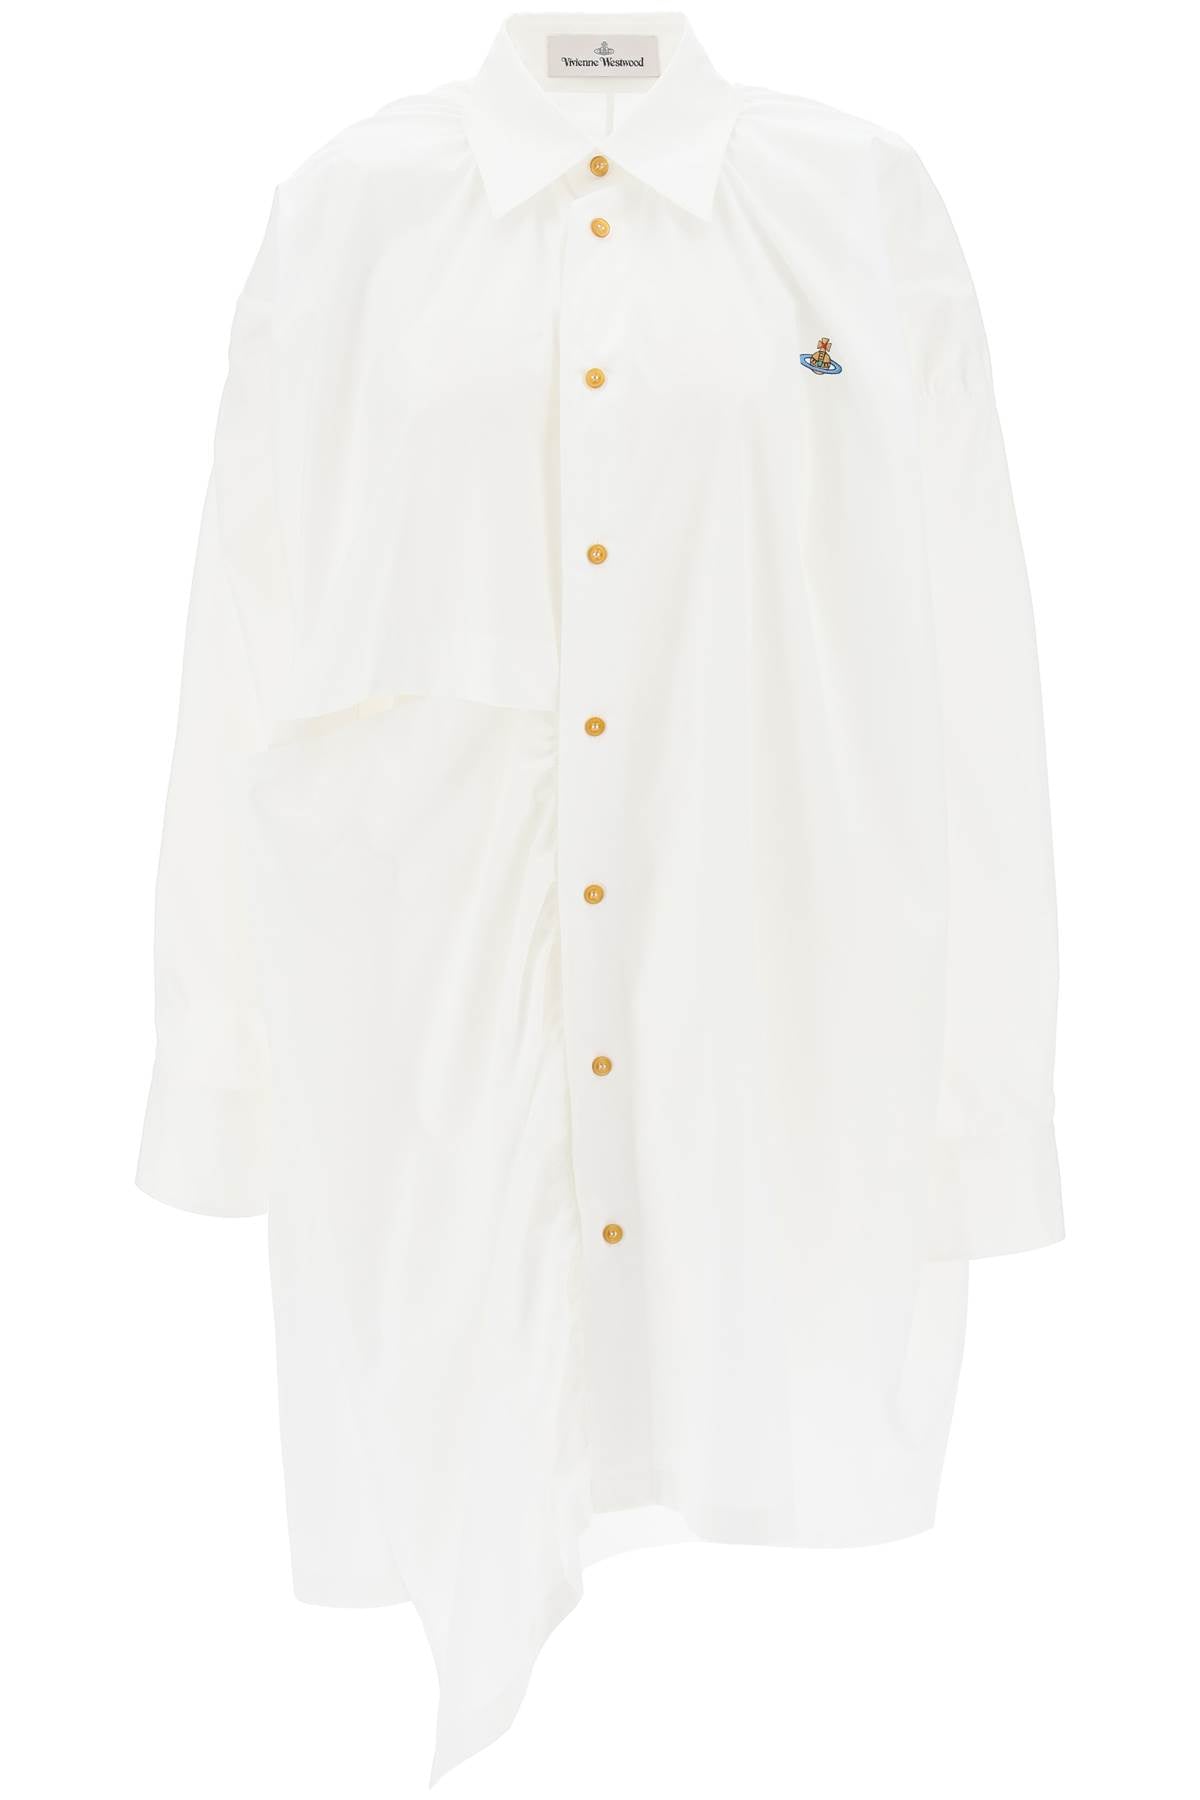 Vivienne westwood gibbon asymmetric shirt dress with cut-outs-0